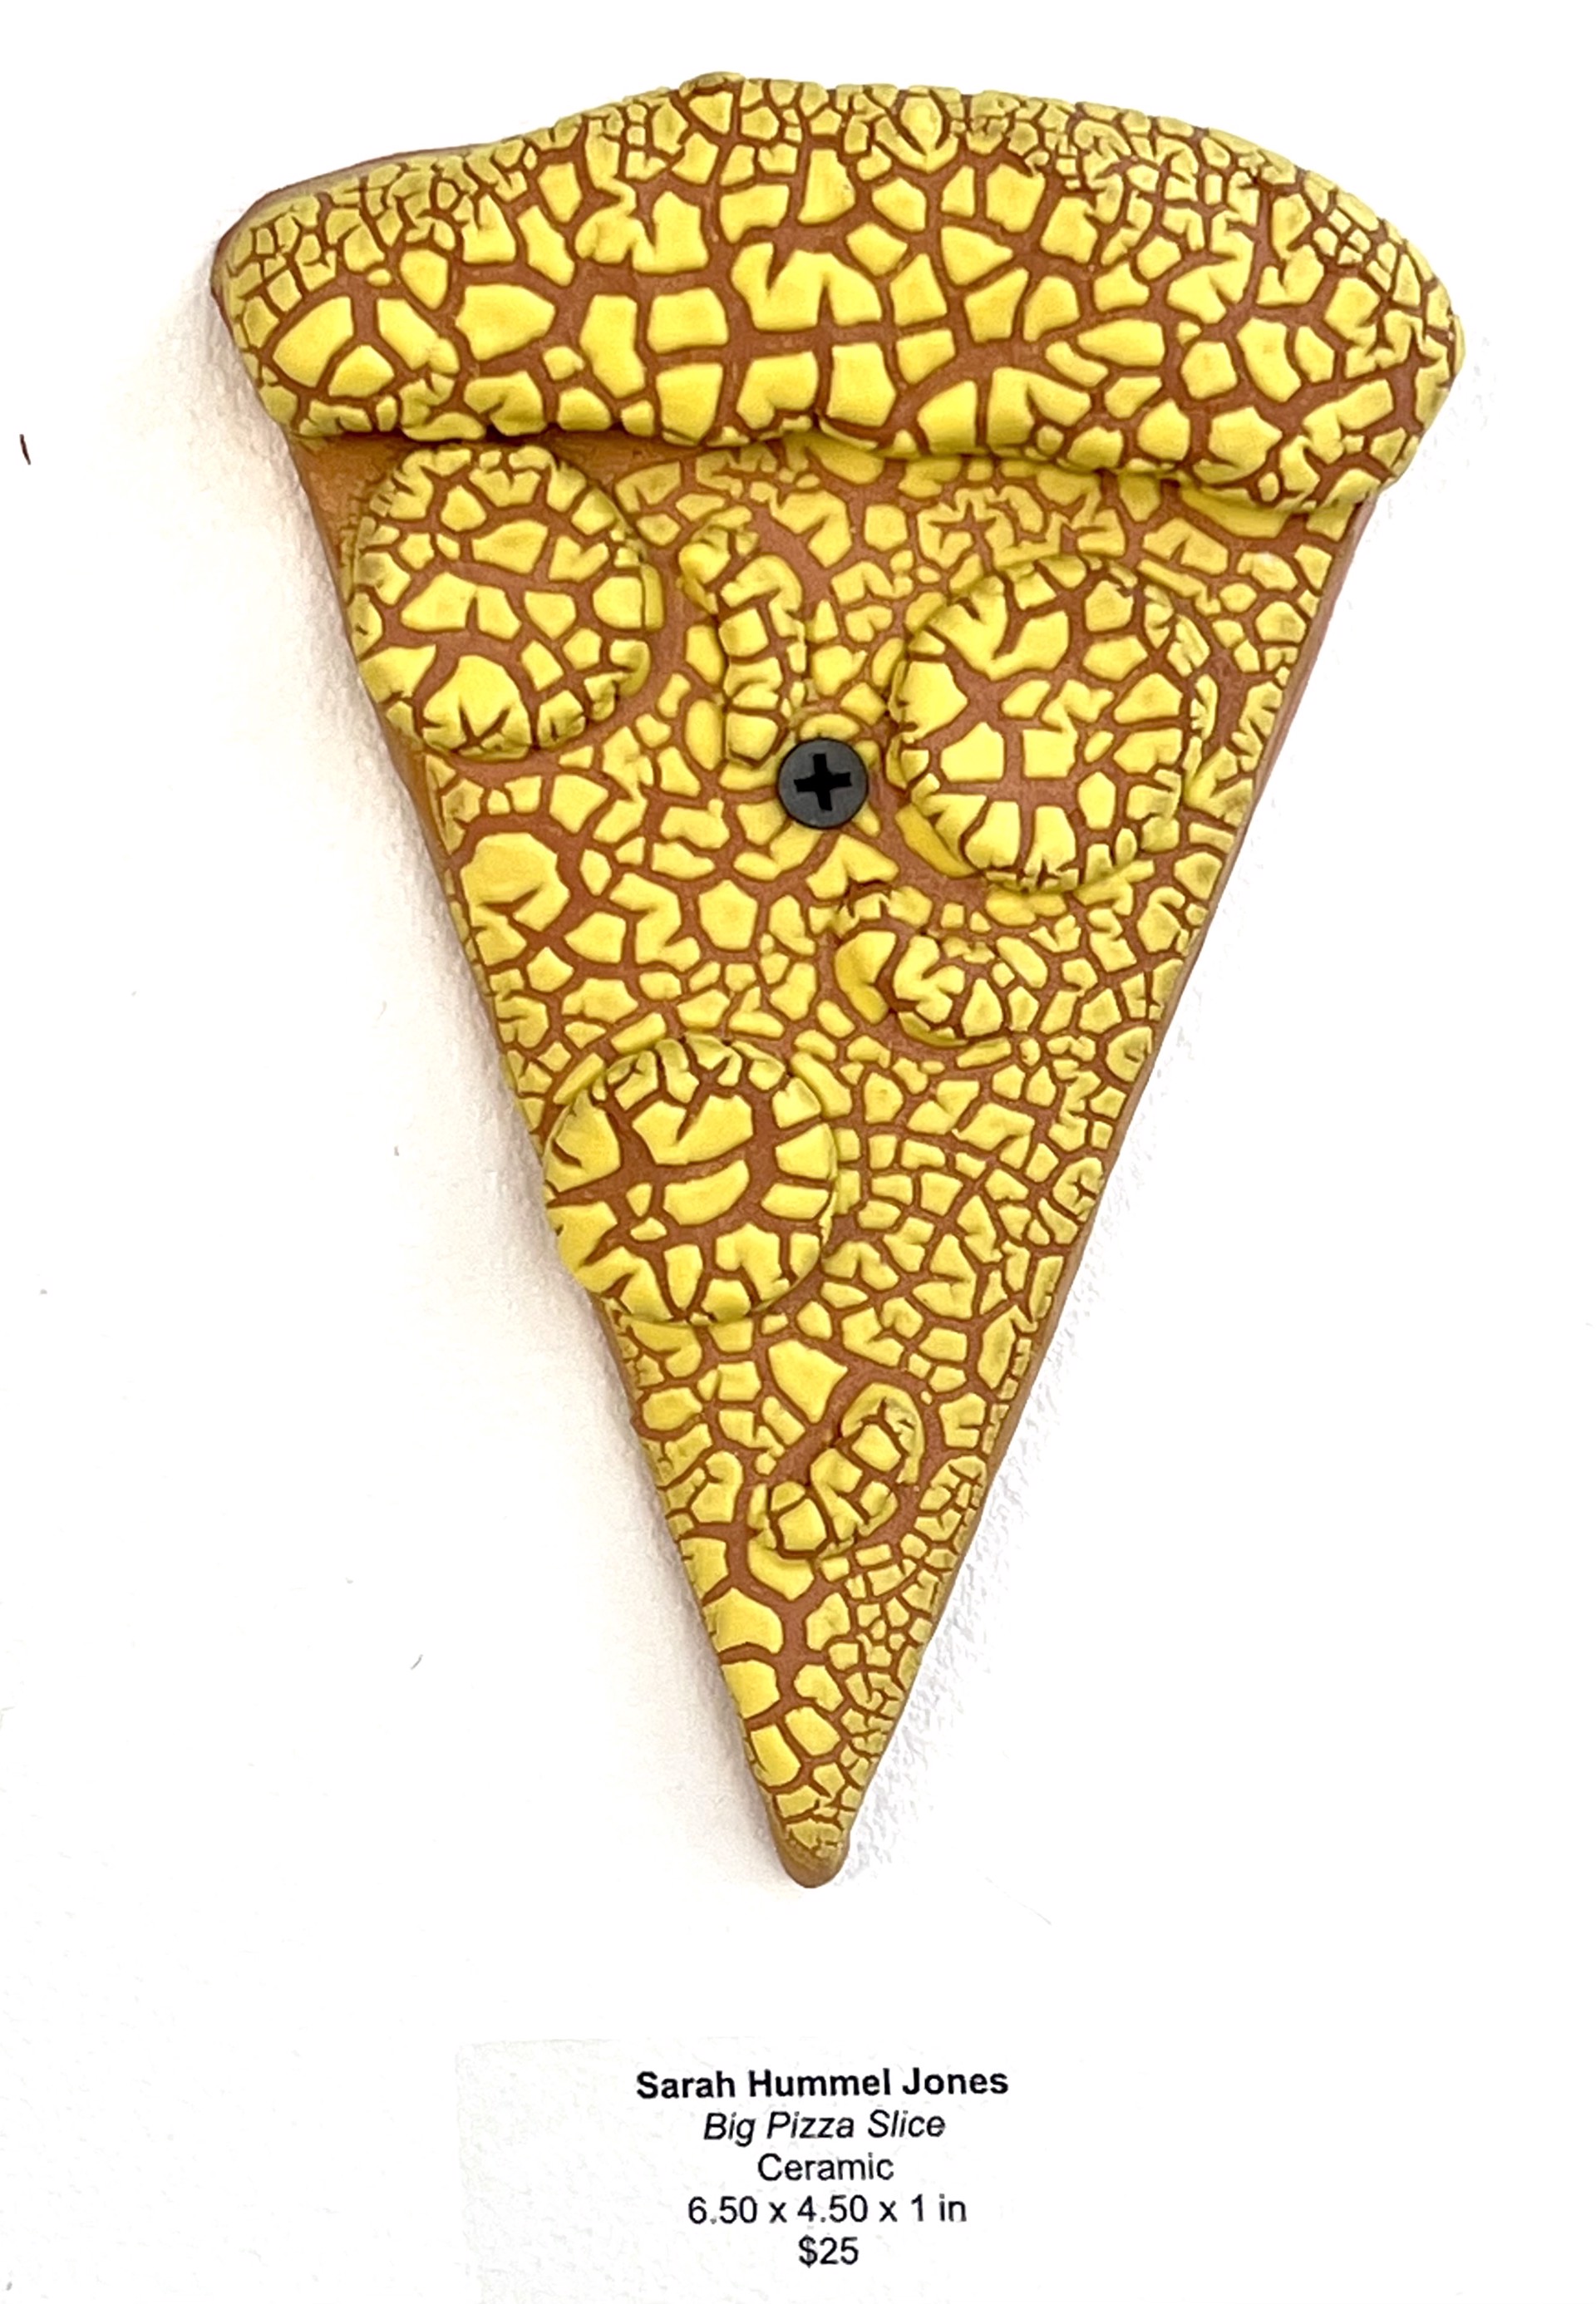 Big Pizza Slice by Sarah Hummel Jones